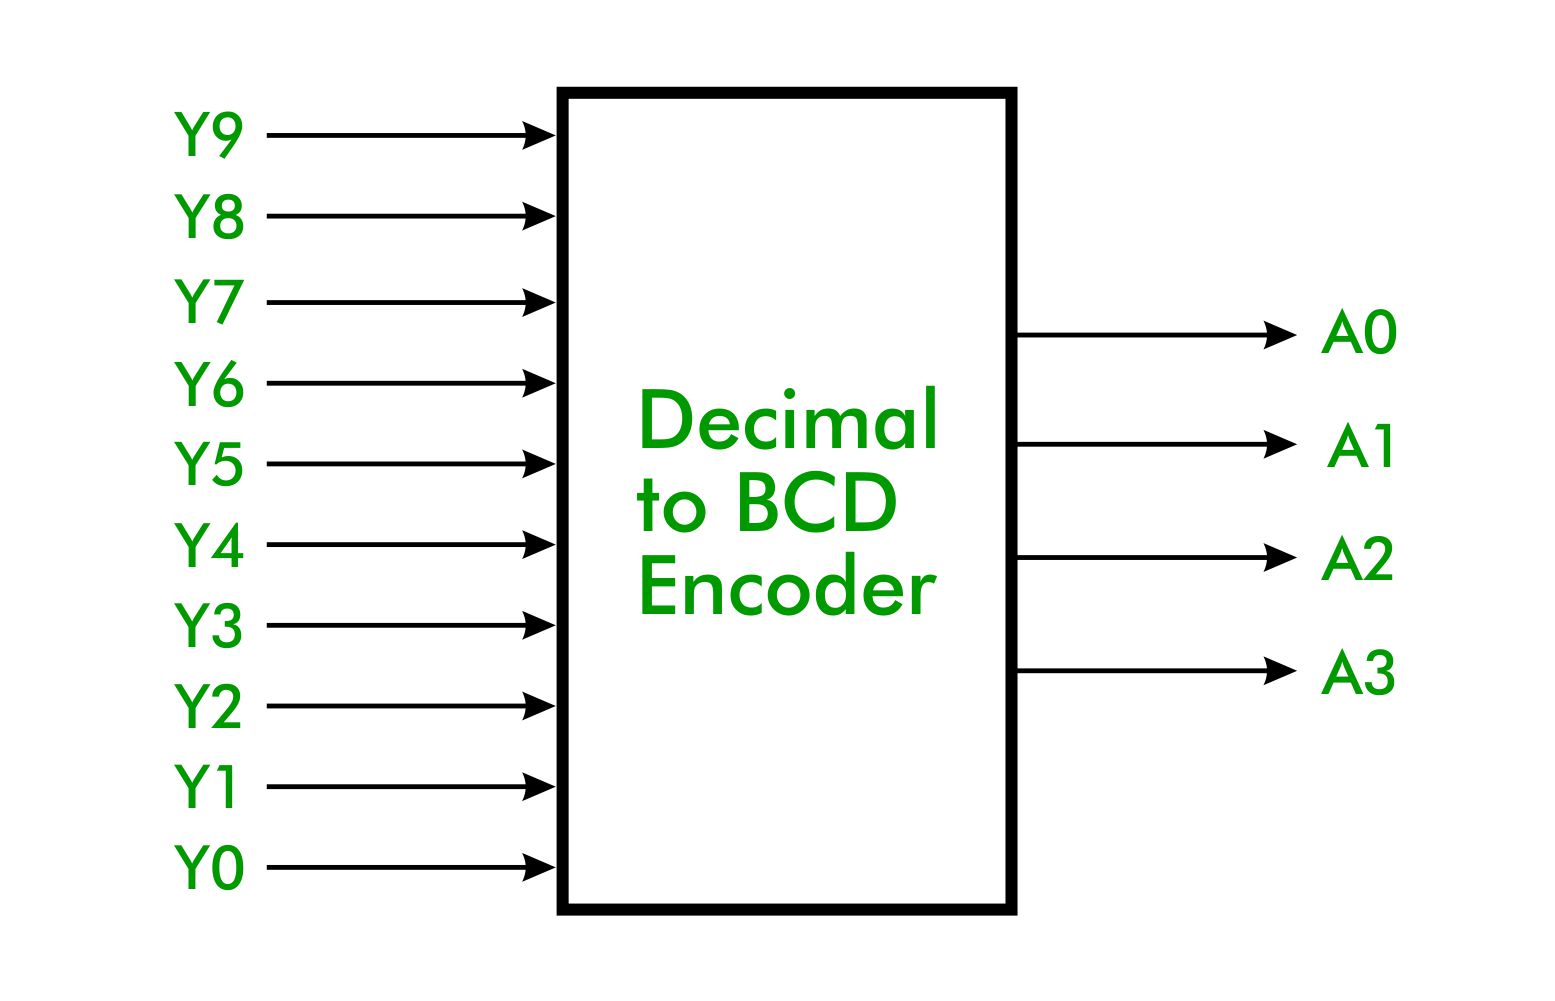 Decimal to BCD encoder